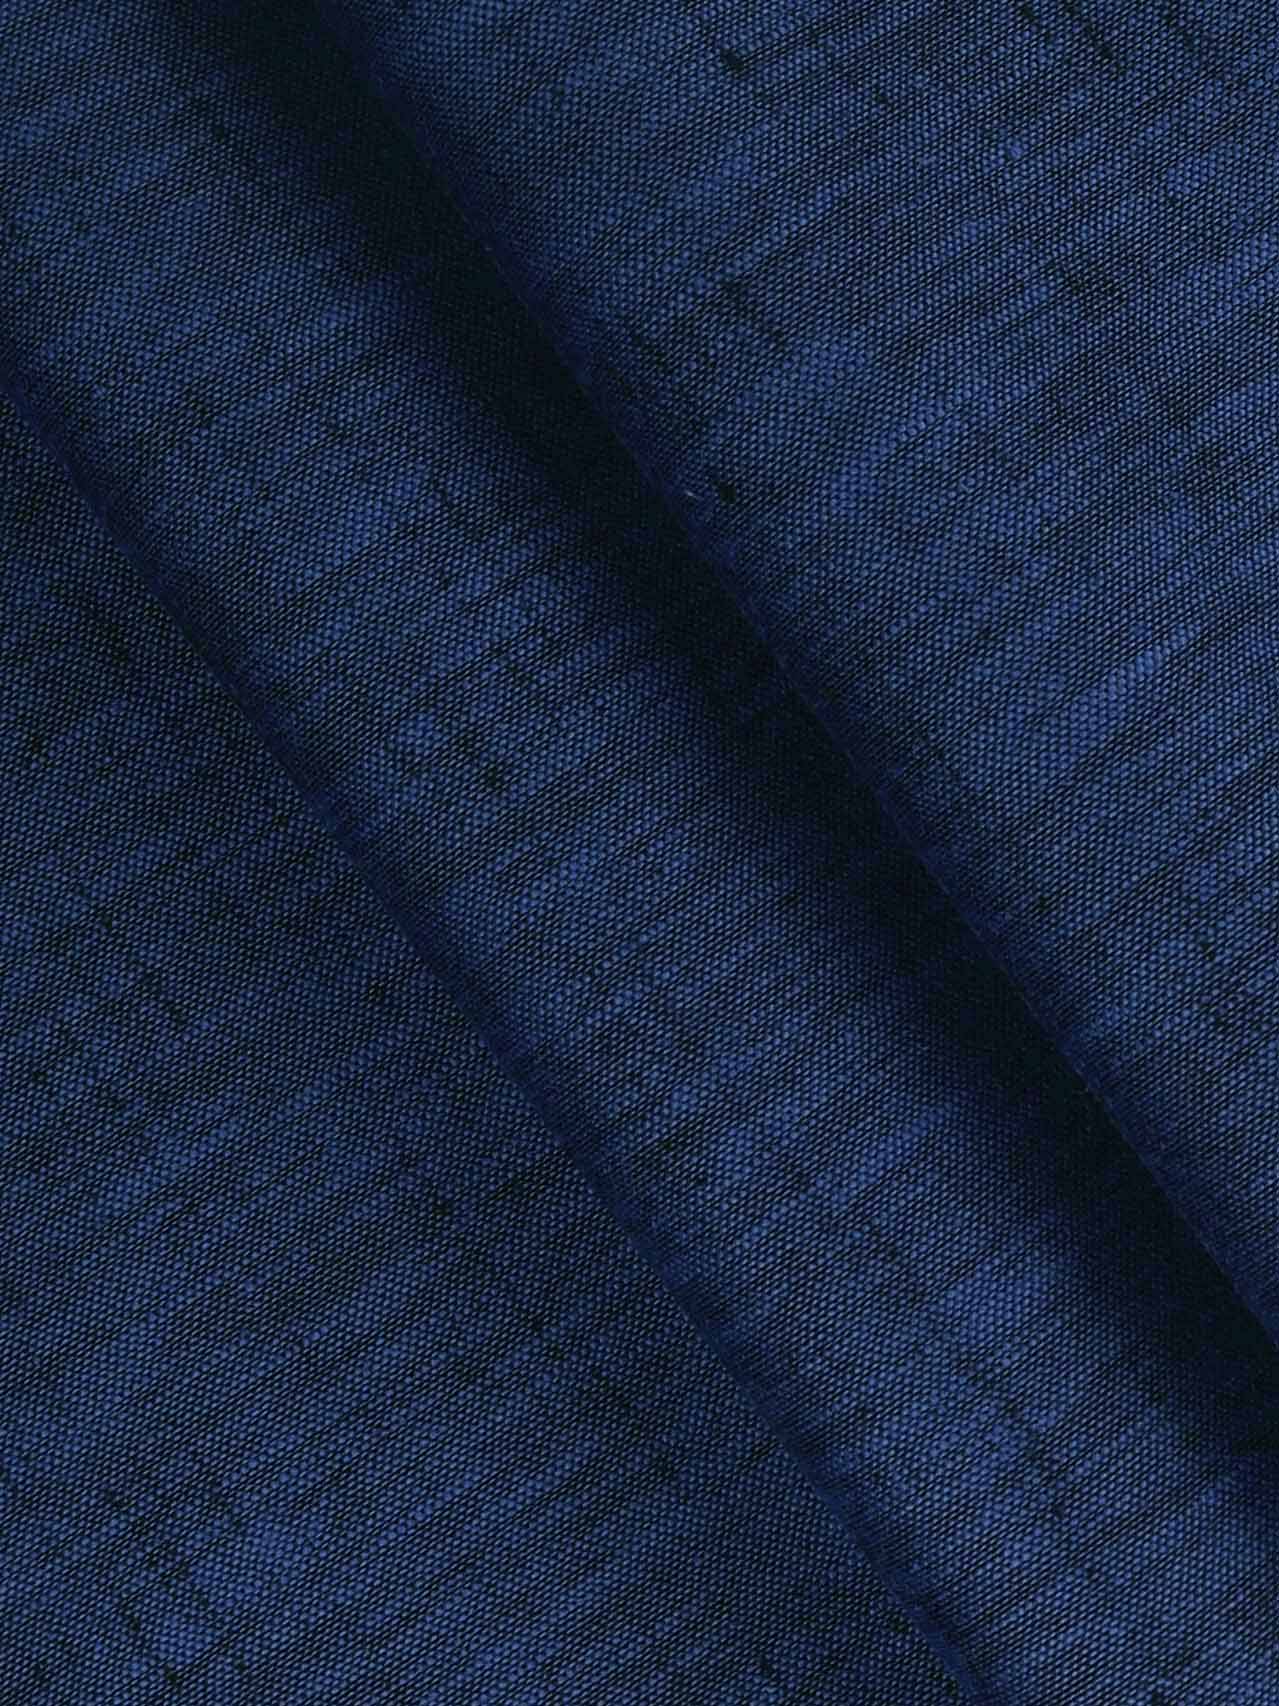 Cotton Blend Navy Colour Plain Shirt Fabric Infinity-Close view